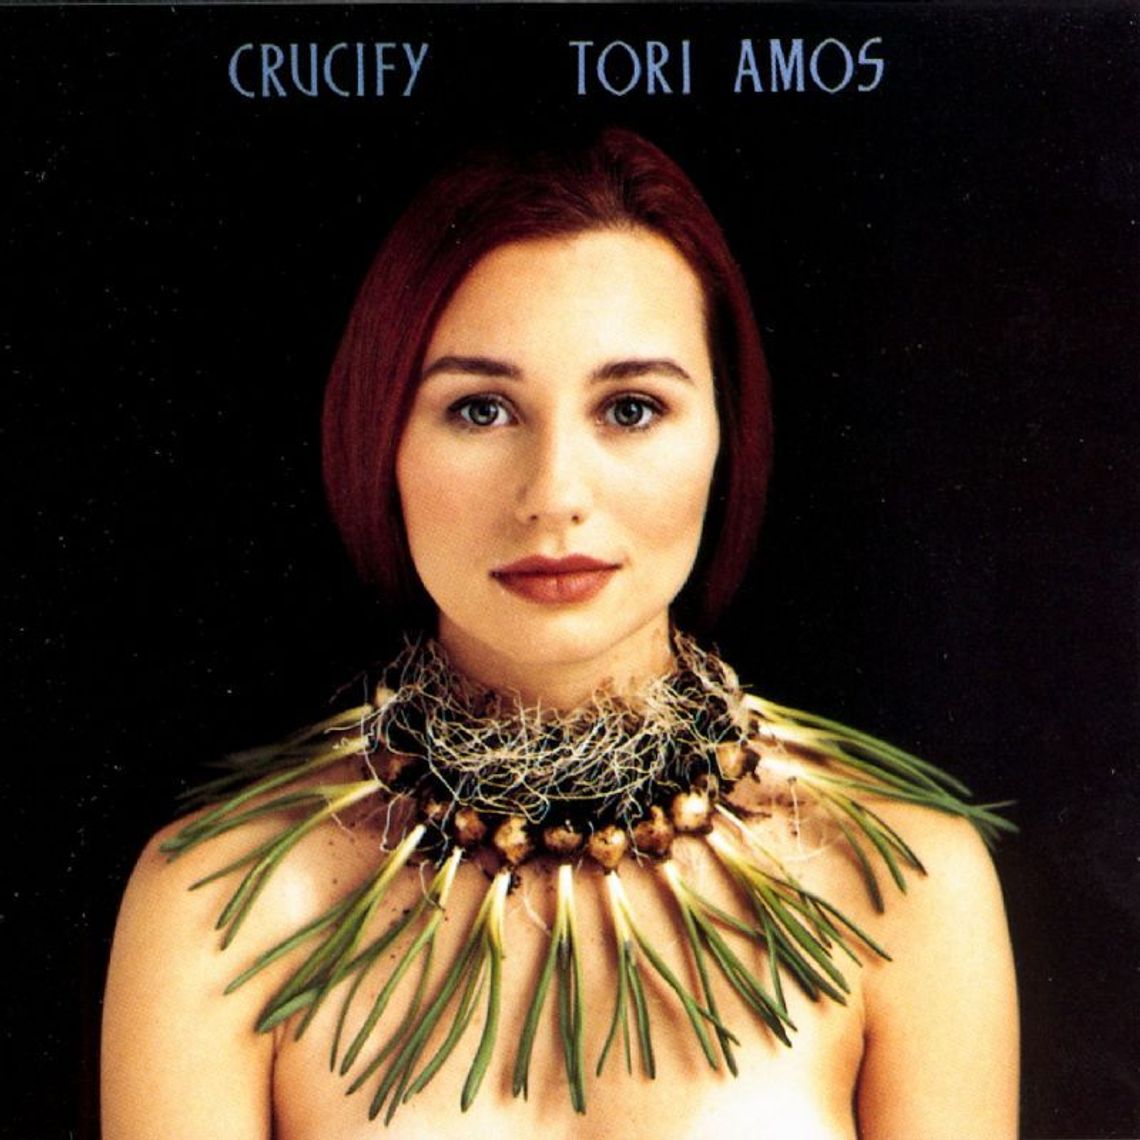 TORI AMOS "Crucify"